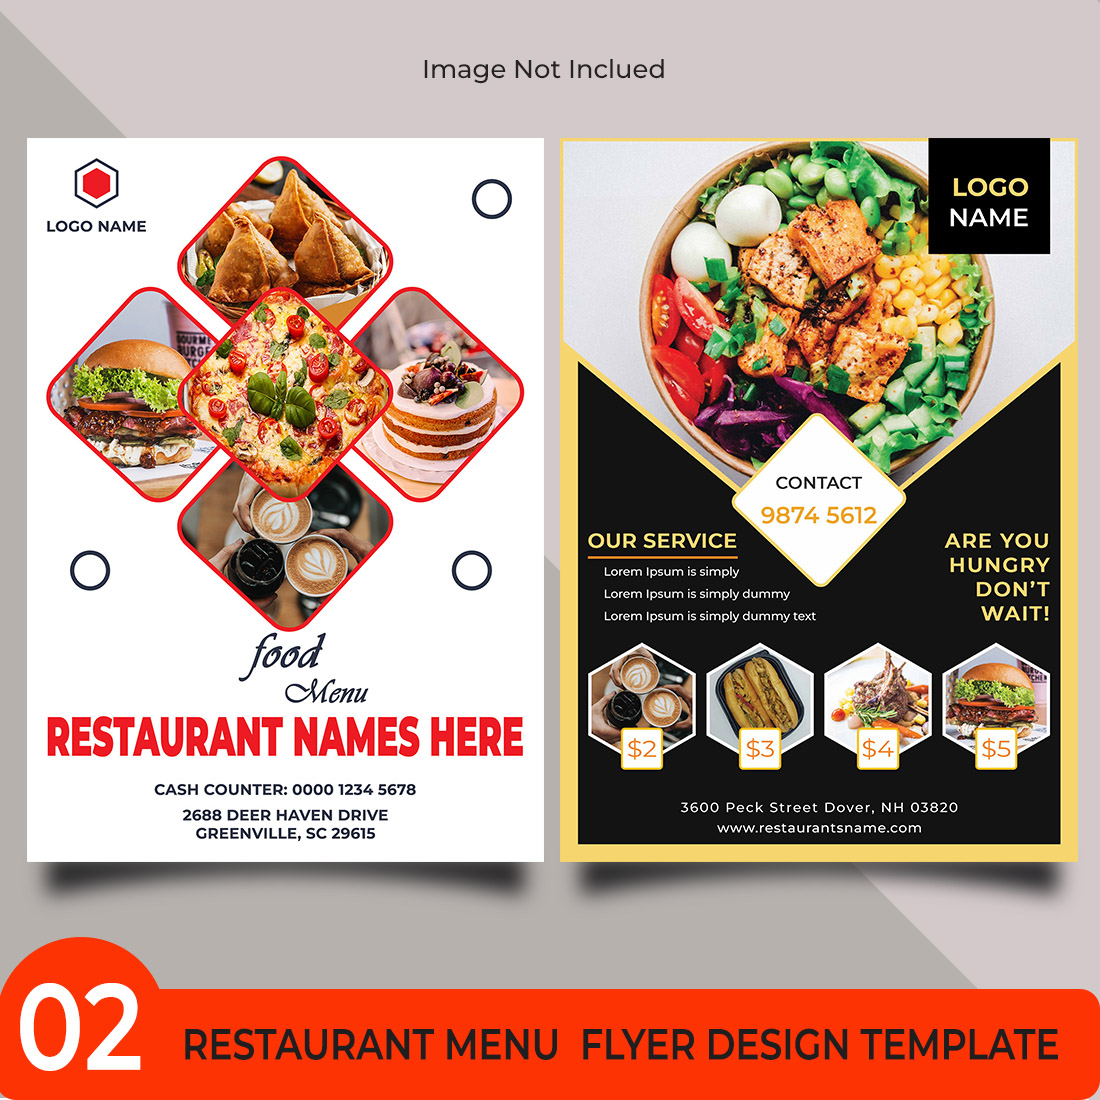 Restaurant Menu Flyer Design Template cover image.